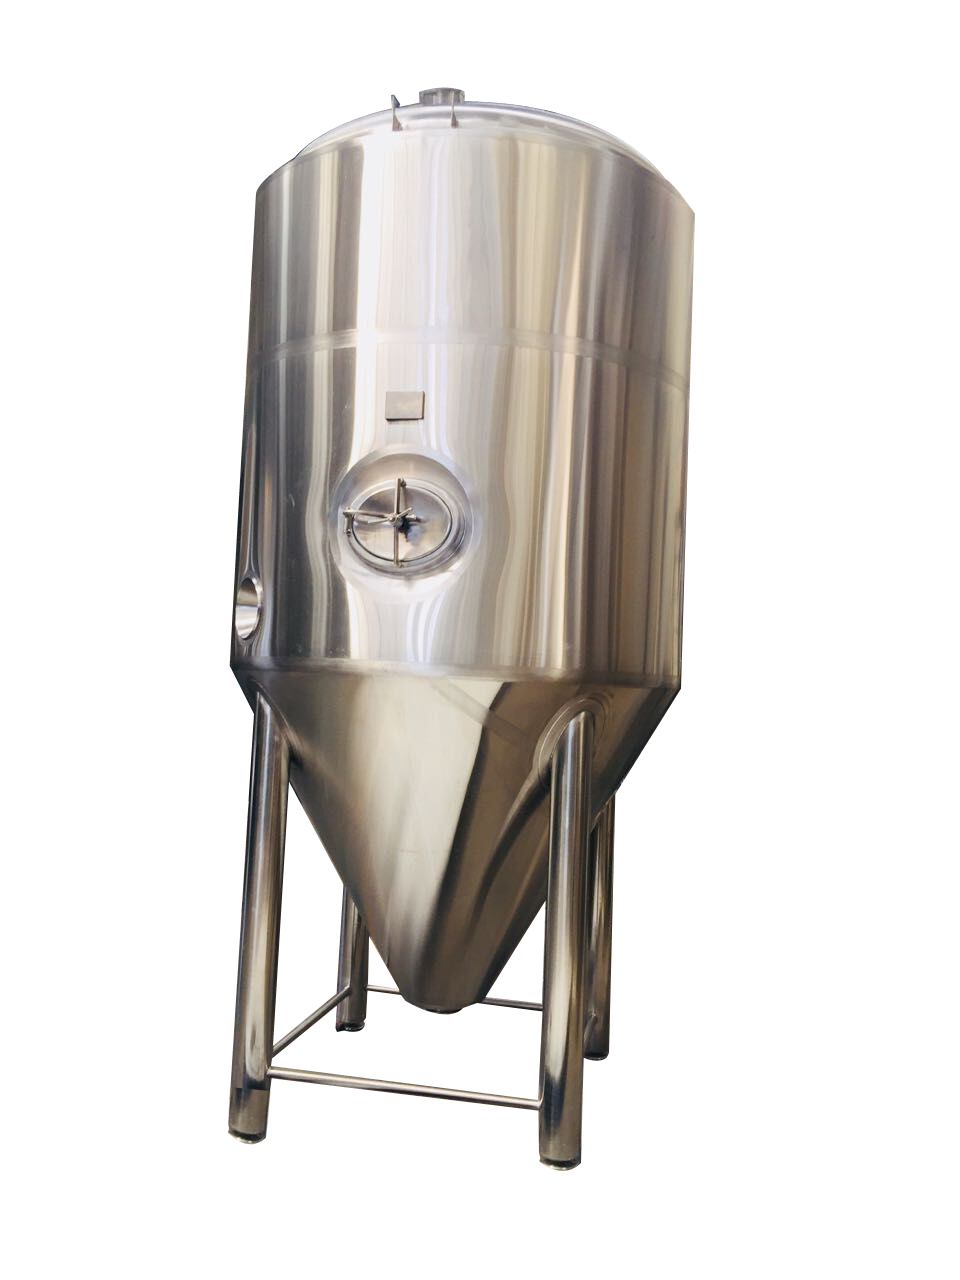 50L-120BBL  Commercial fermentation tanks ZXY